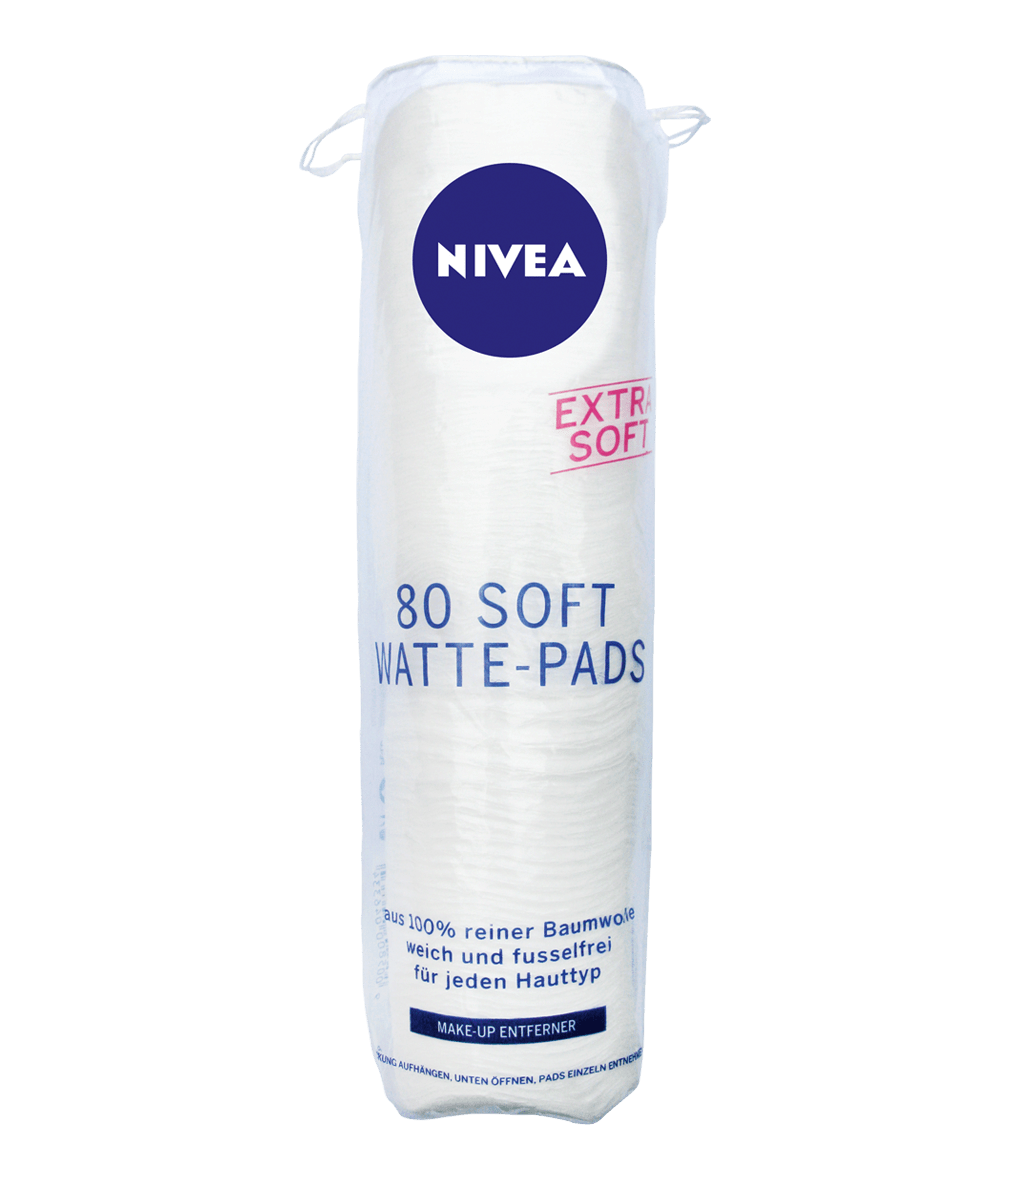 NIVEA Watte-Pads